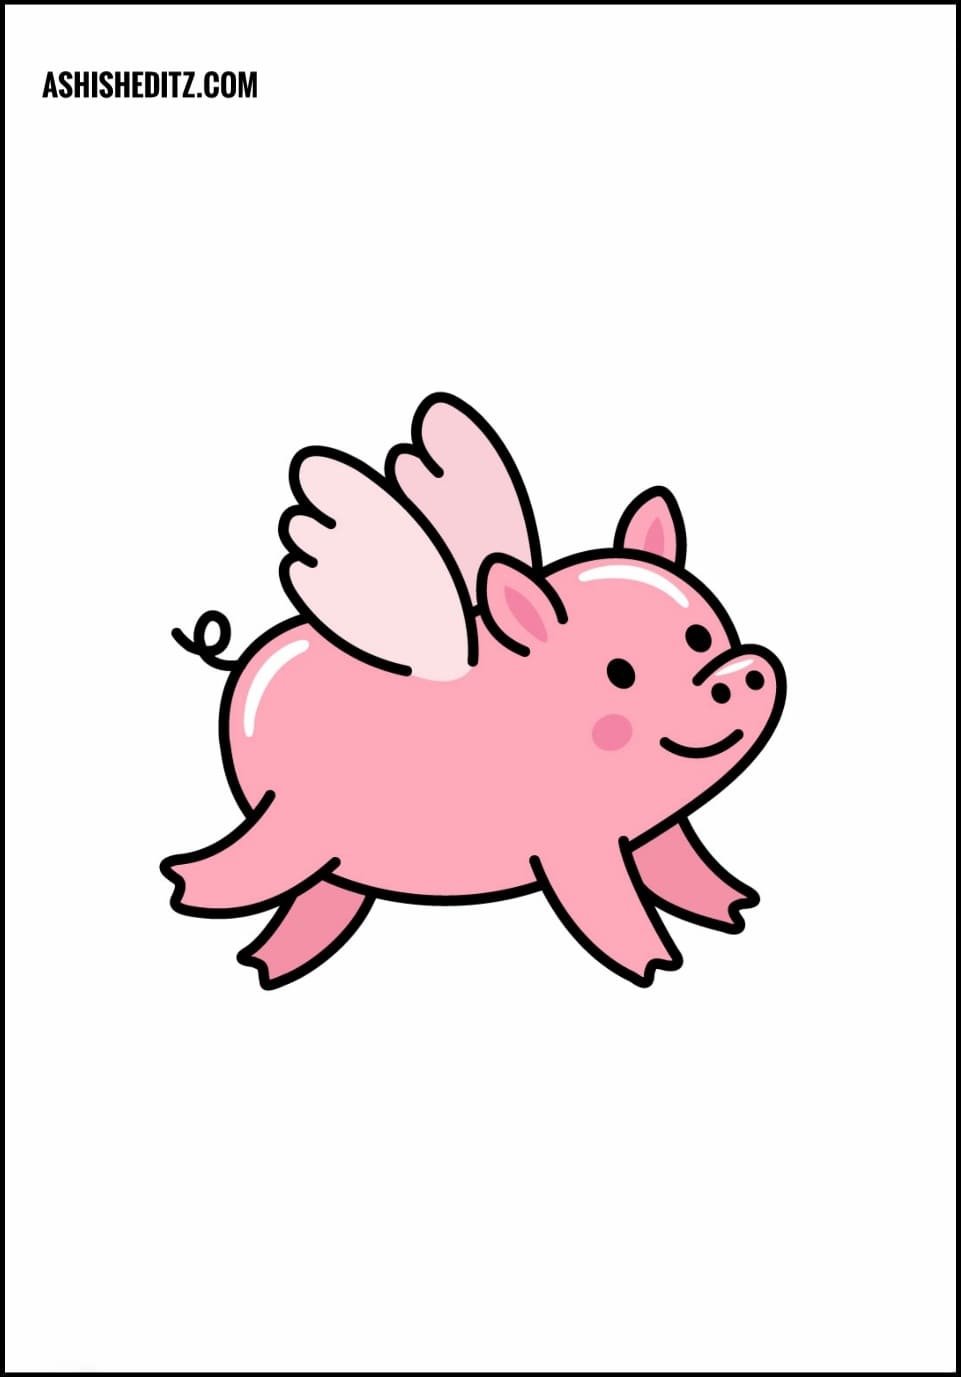 How to Draw a Pig | Design School